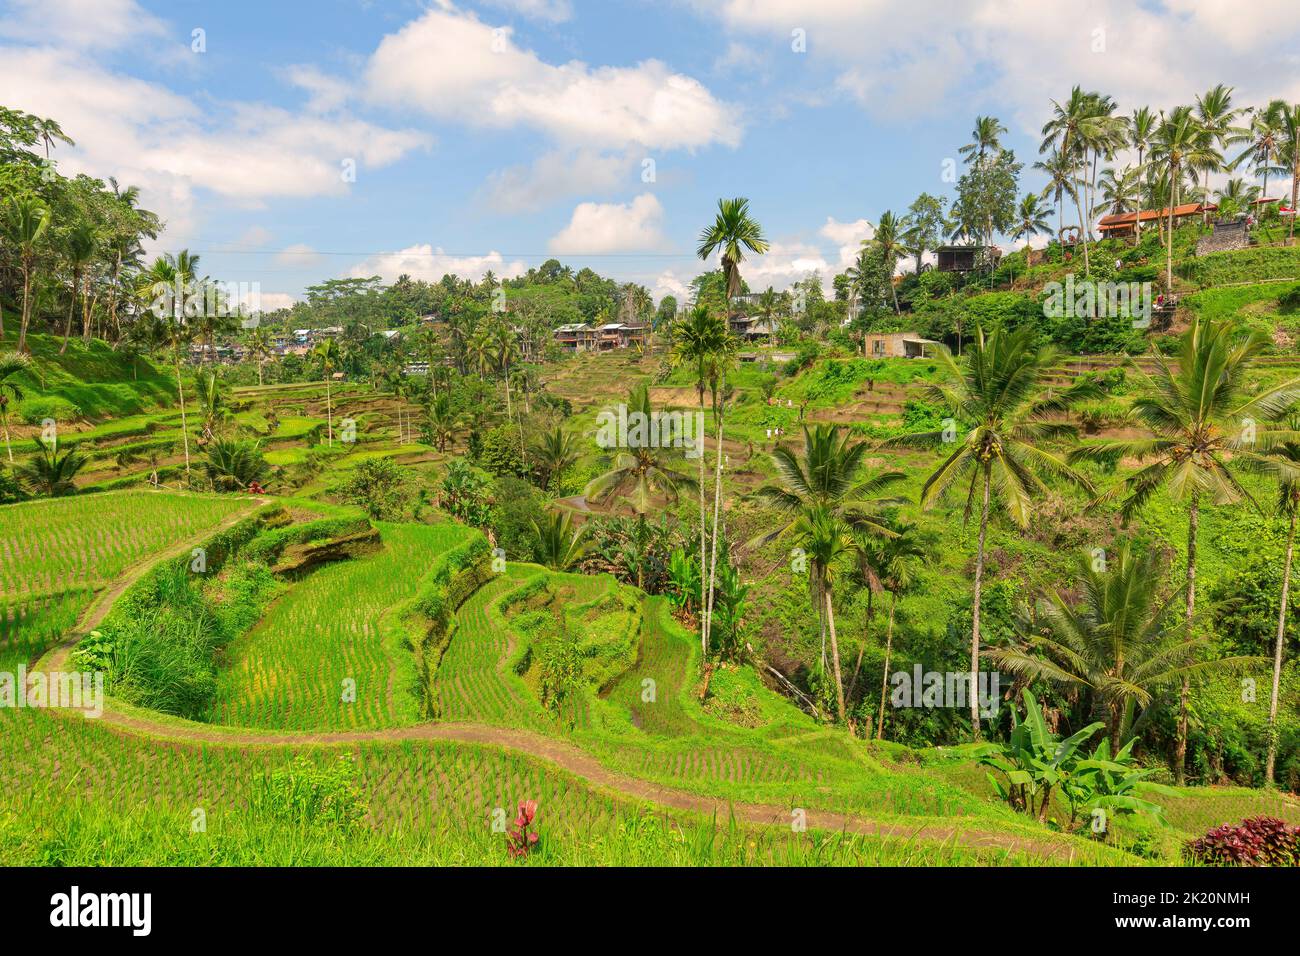 TEGALALANG, UBUD, BALI, INDONESIEN: Die Landschaft der Reisfelder. Reisterrassen berühmter Ort Tegallalang in der Nähe von Ubud. Die Insel Bali in indonesien in Stockfoto